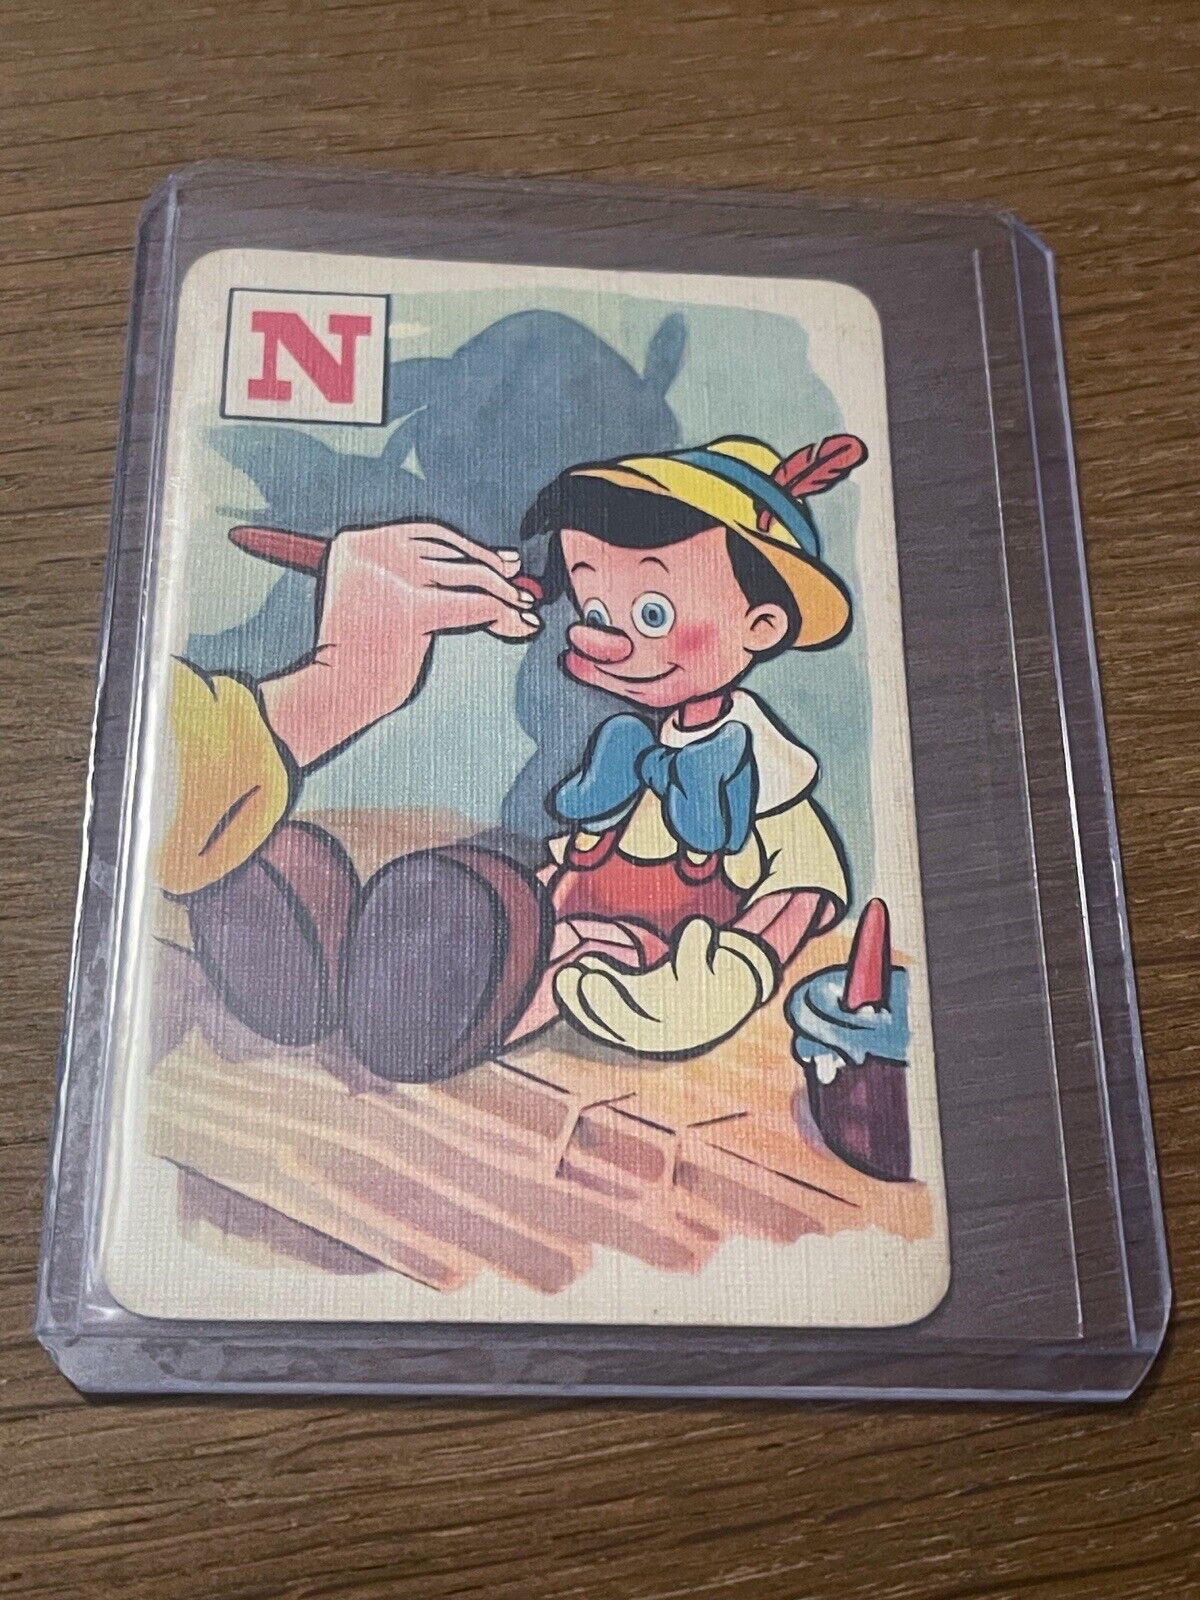 WALT DISNEY 🎥 1940 Castell PINOCCHIO Card Game Card VERY RARE DISNEYANA